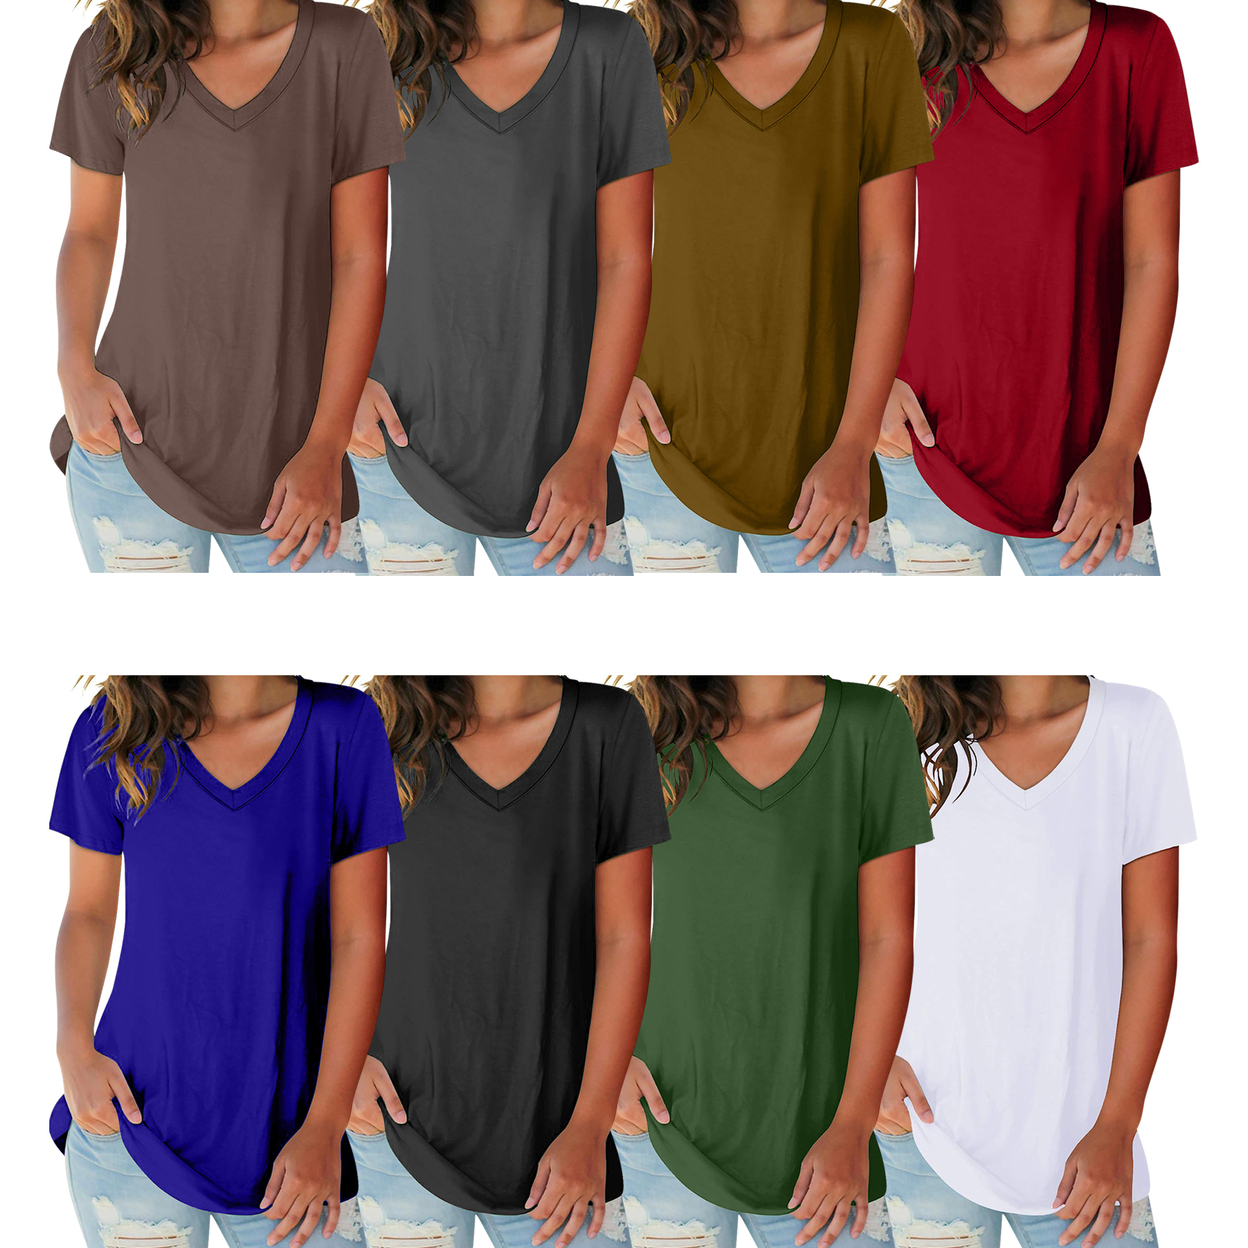 3-Pack: Women's Ultra Soft Smooth Cotton Blend Basic V-Neck Short Sleeve Shirts - Black White, Red, X-large